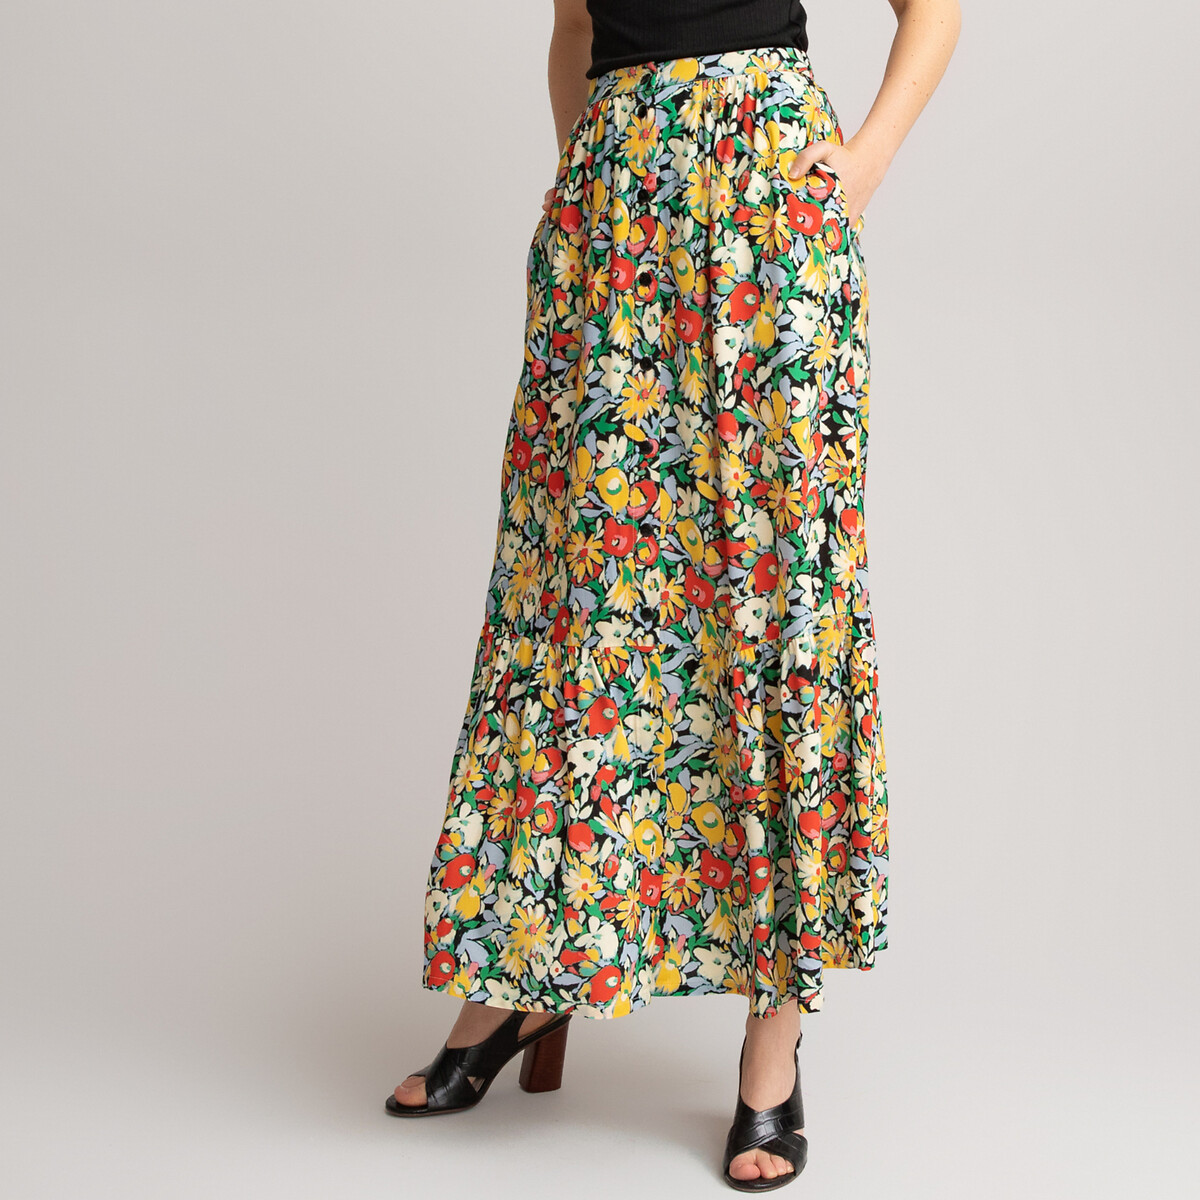 Ruffled Maxi Skirt in Floral Print